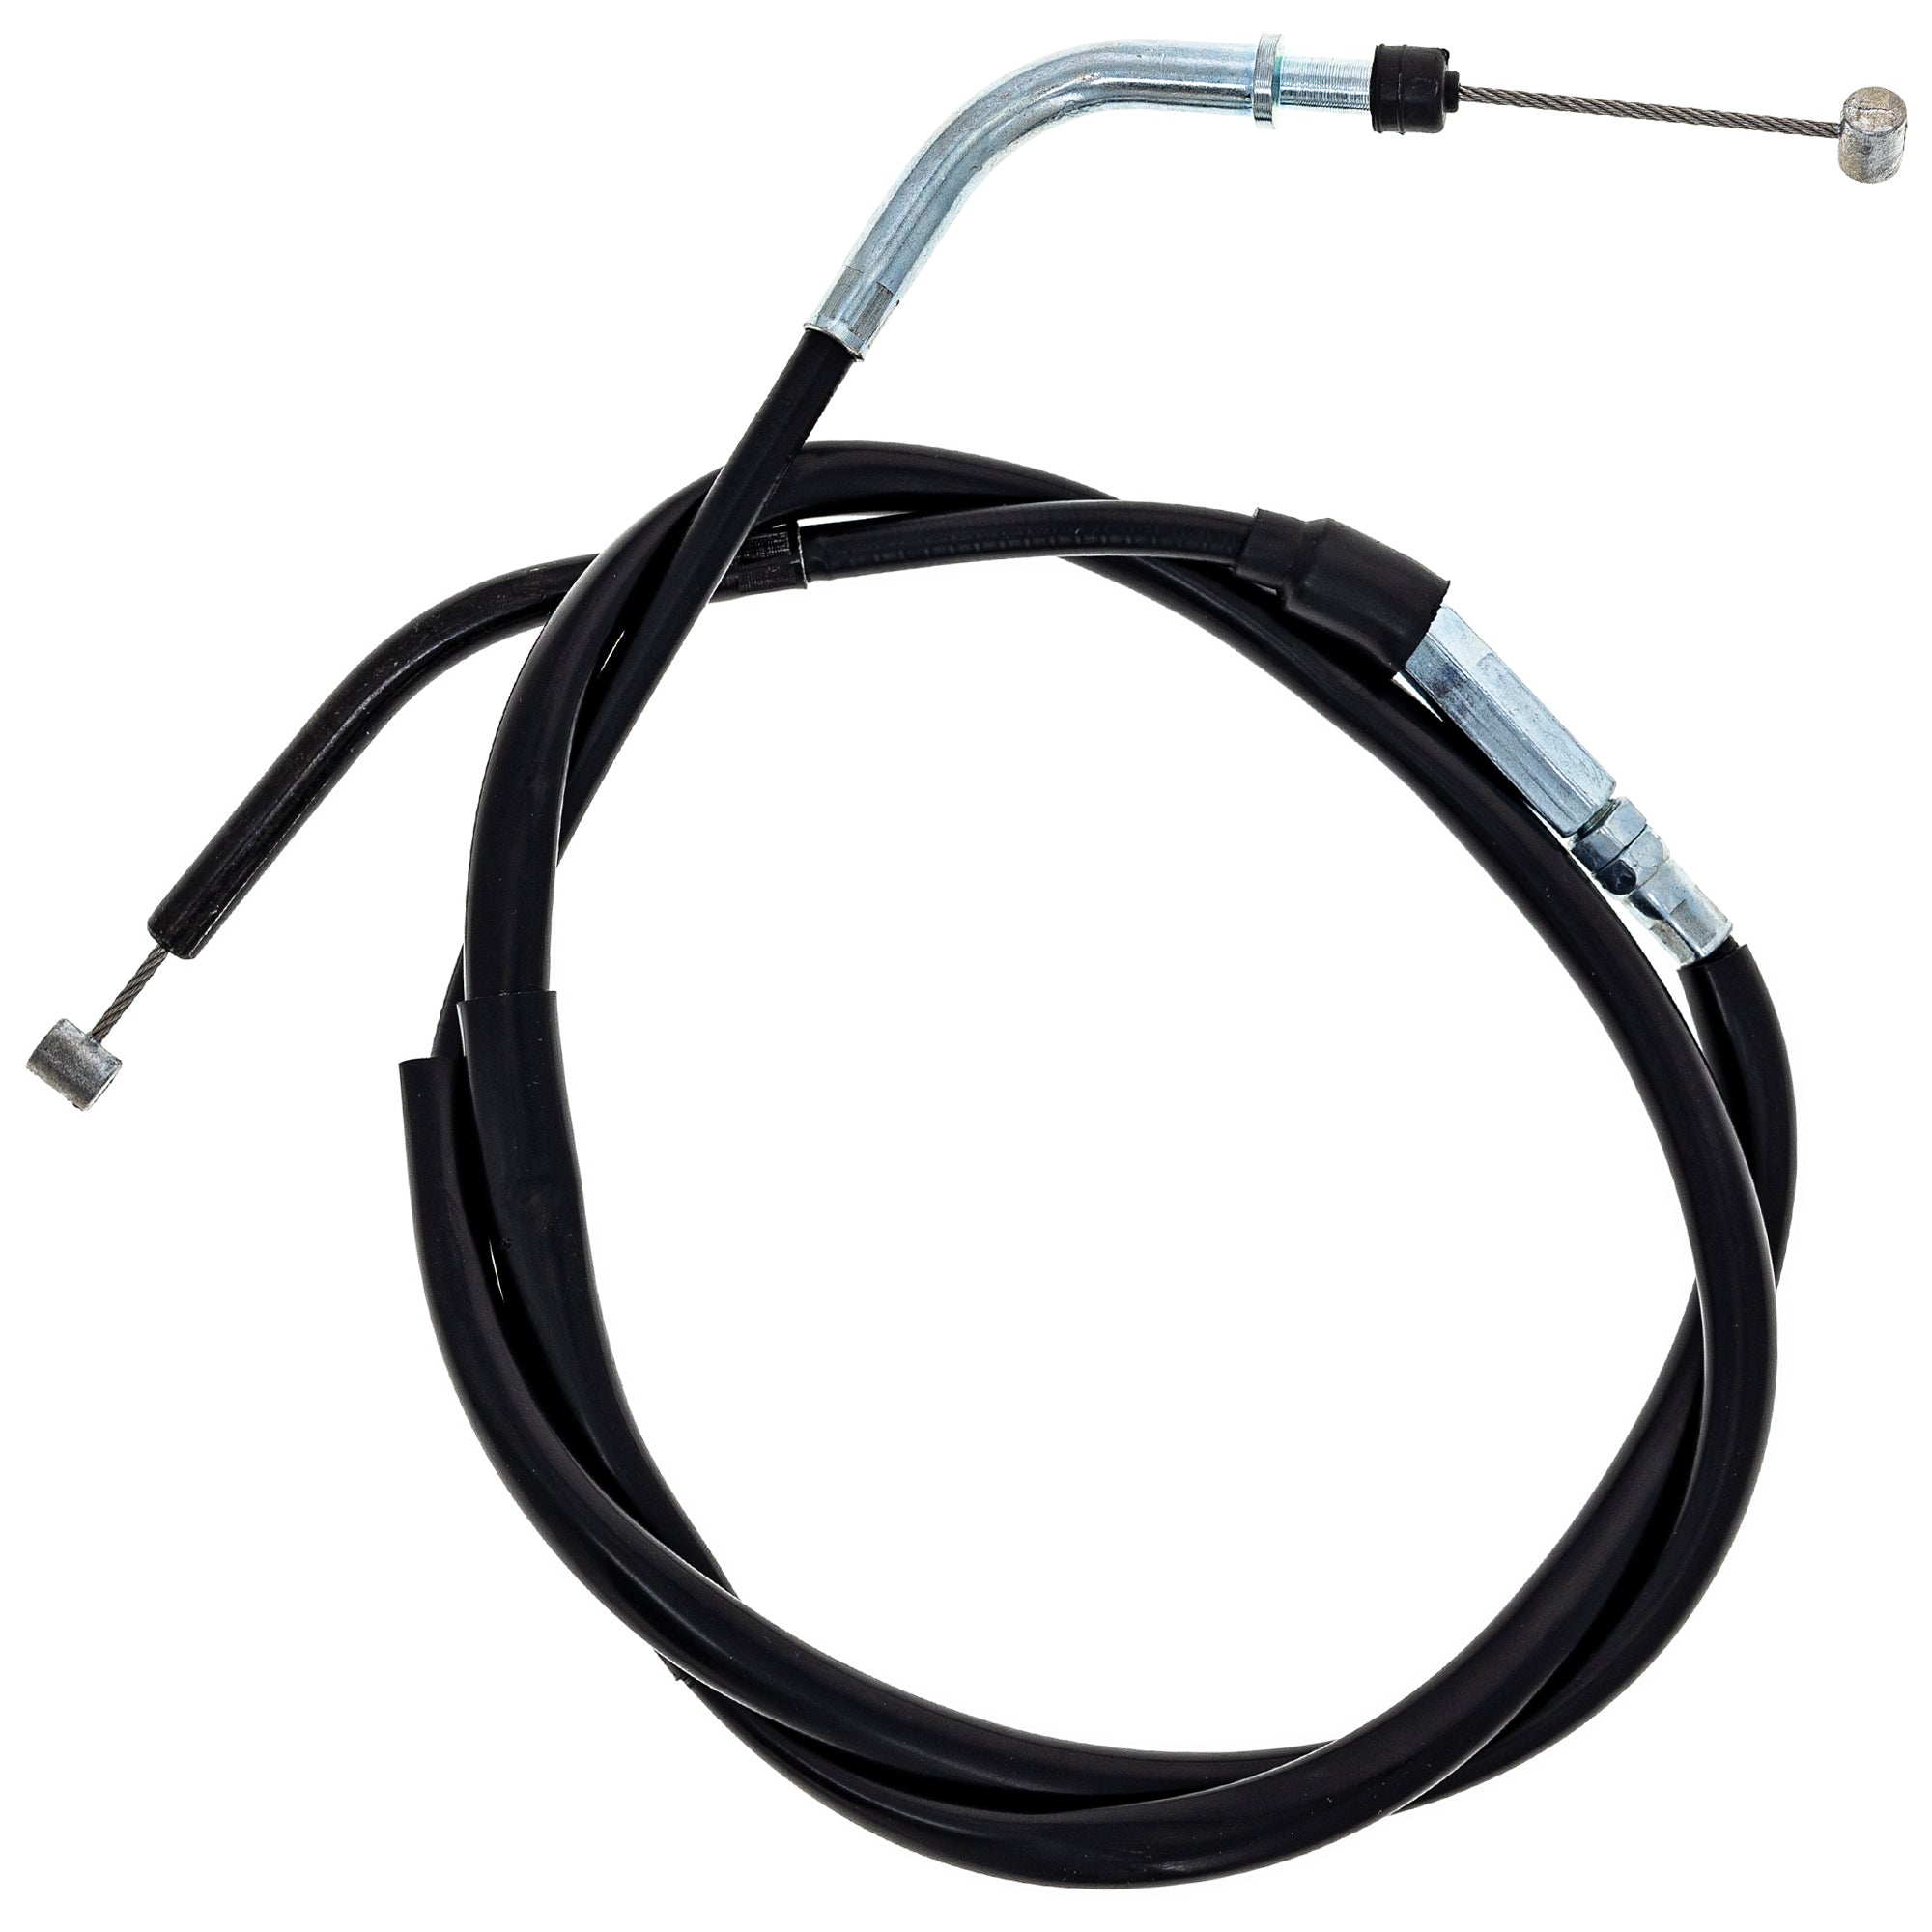 Clutch Cable for zOTHER Arctic Cat Textron Quadsport KFX400 Cat NICHE 519-CCB2242L